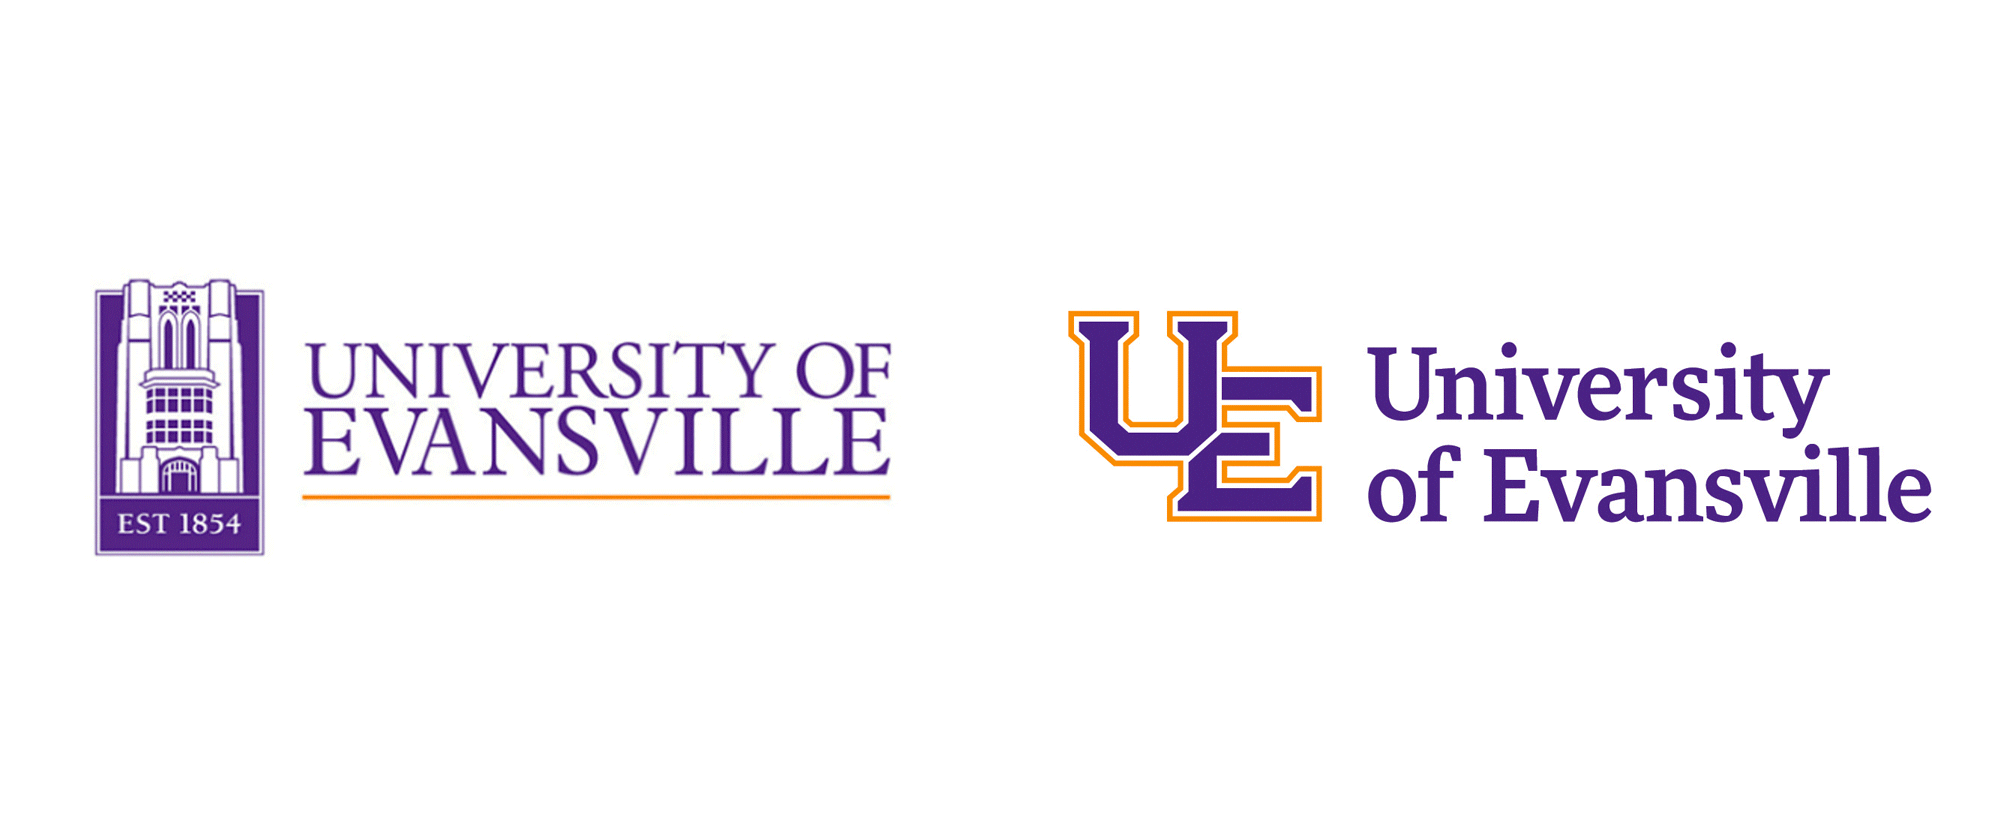 New Logos for University of Evansville by Ologie